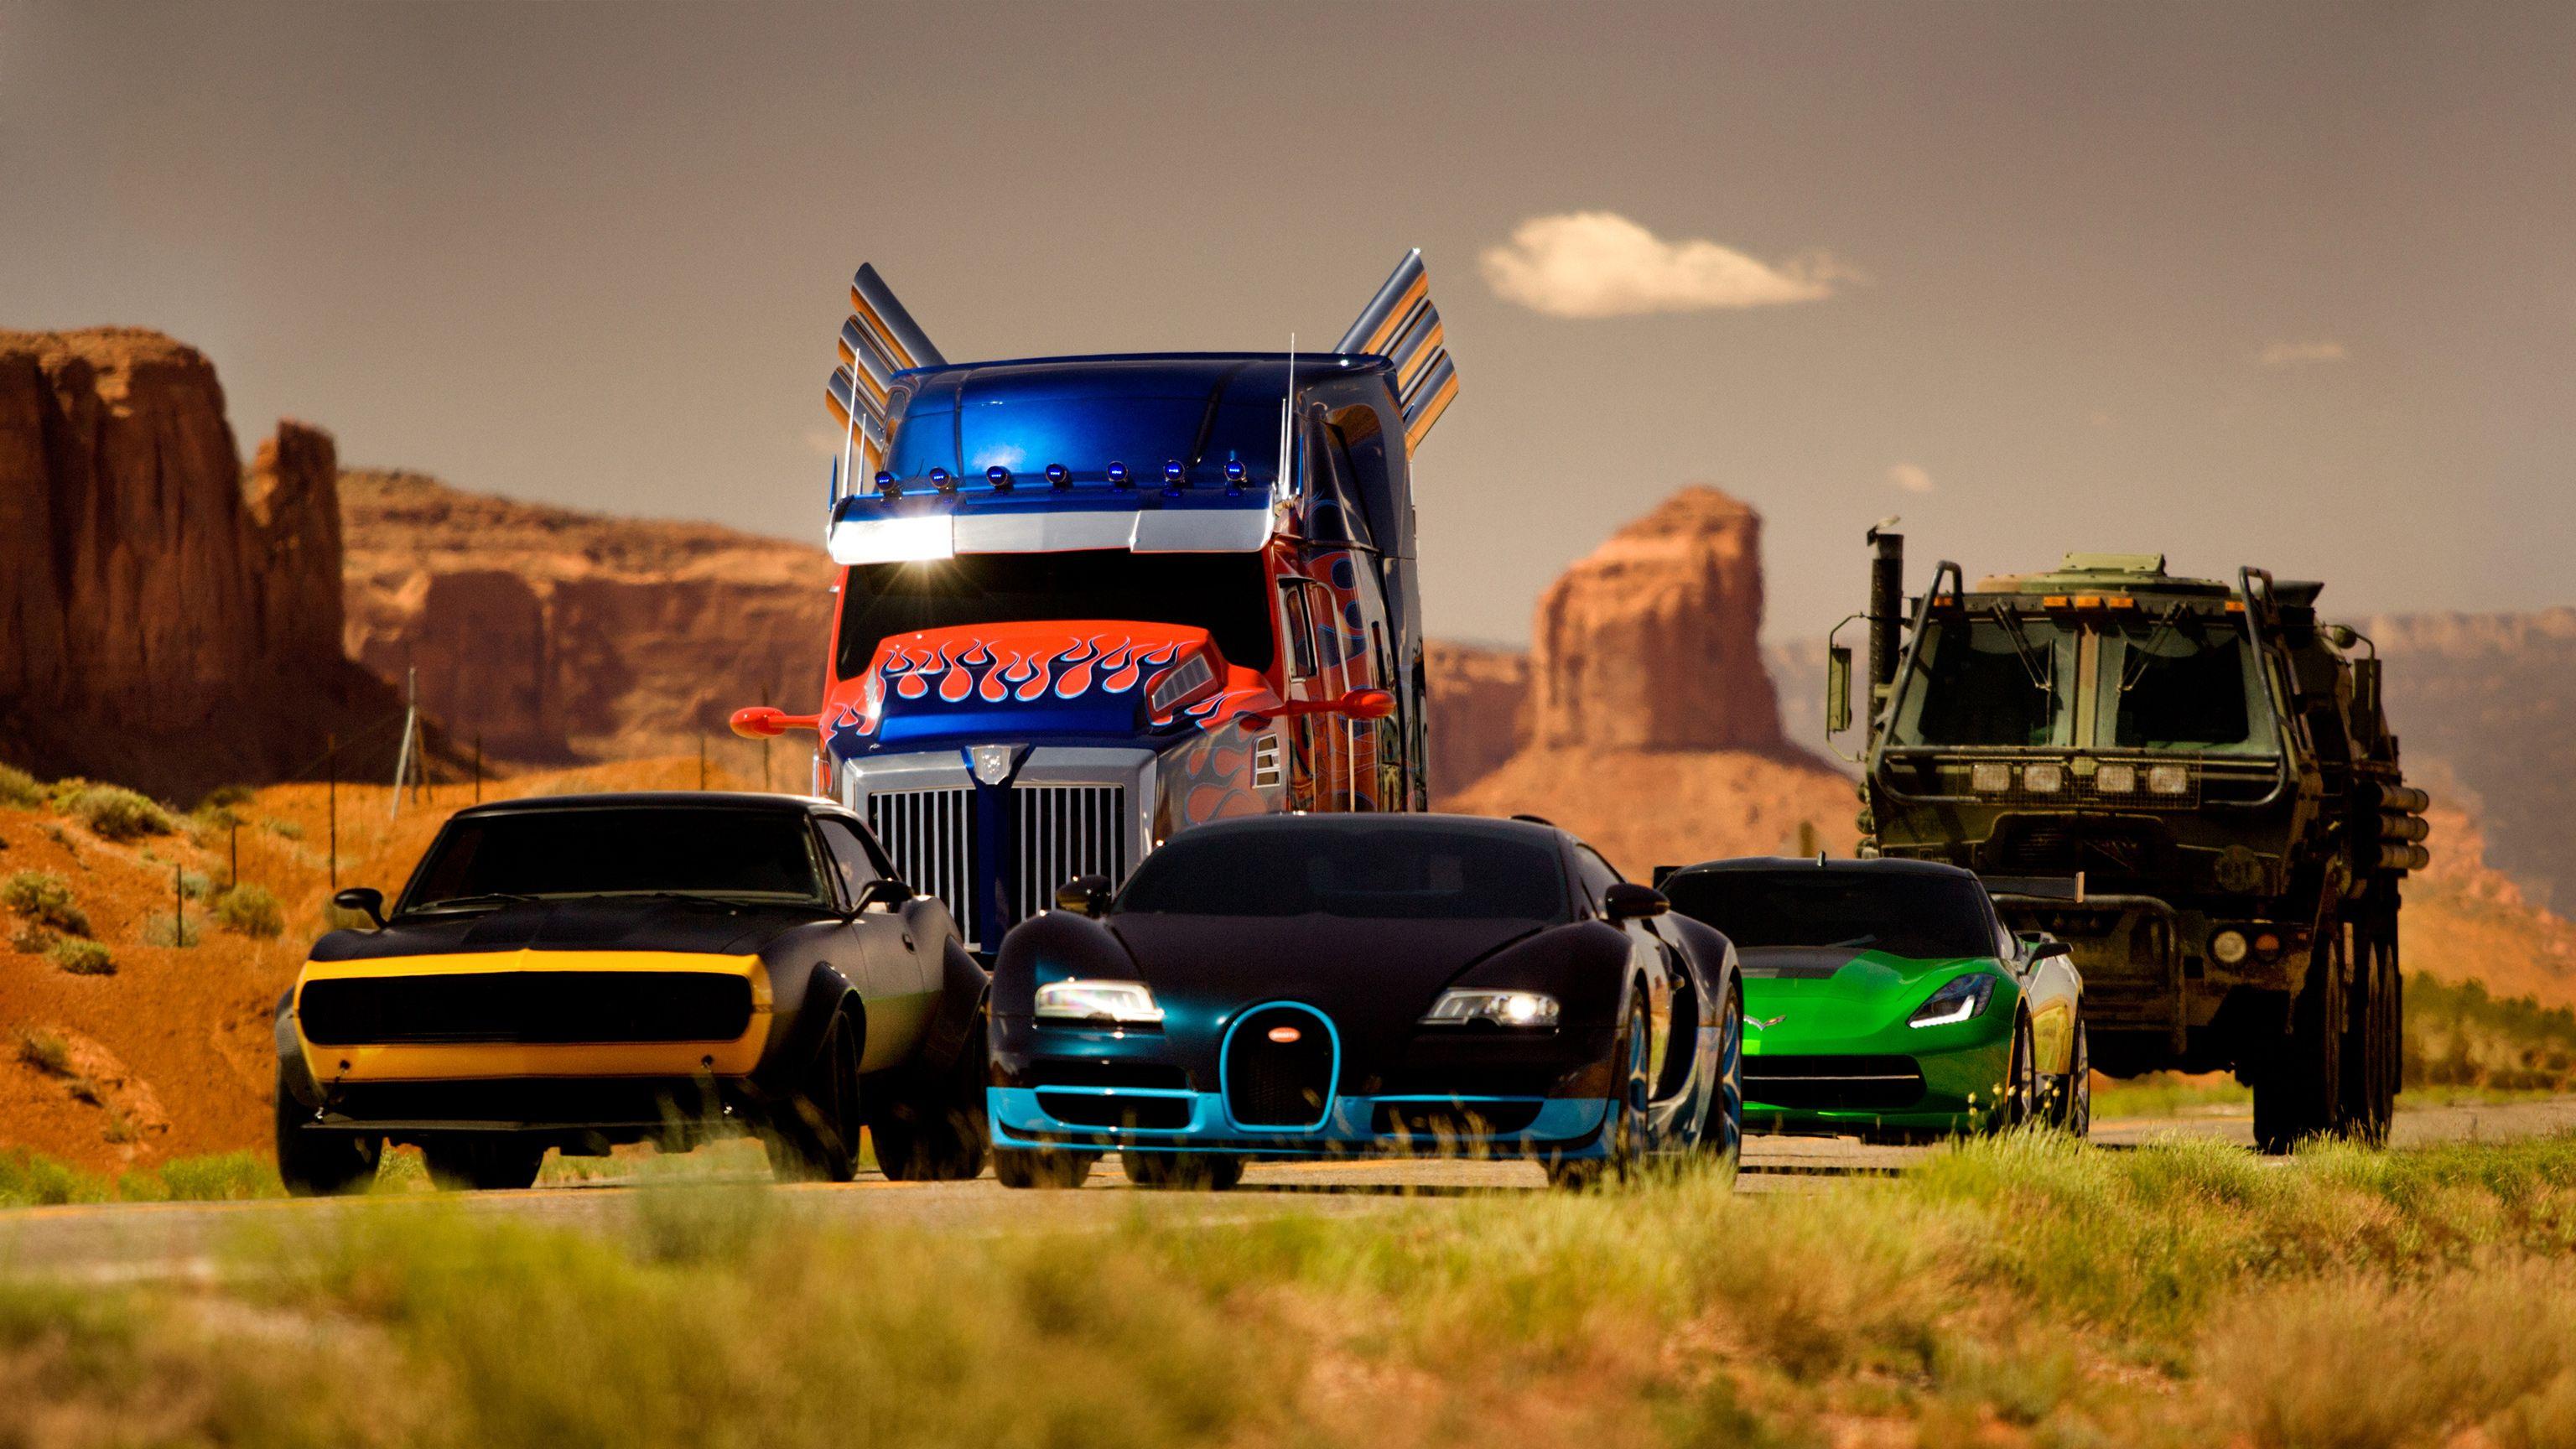 Transformers Cars Wallpaper. HD Car Wallpaper